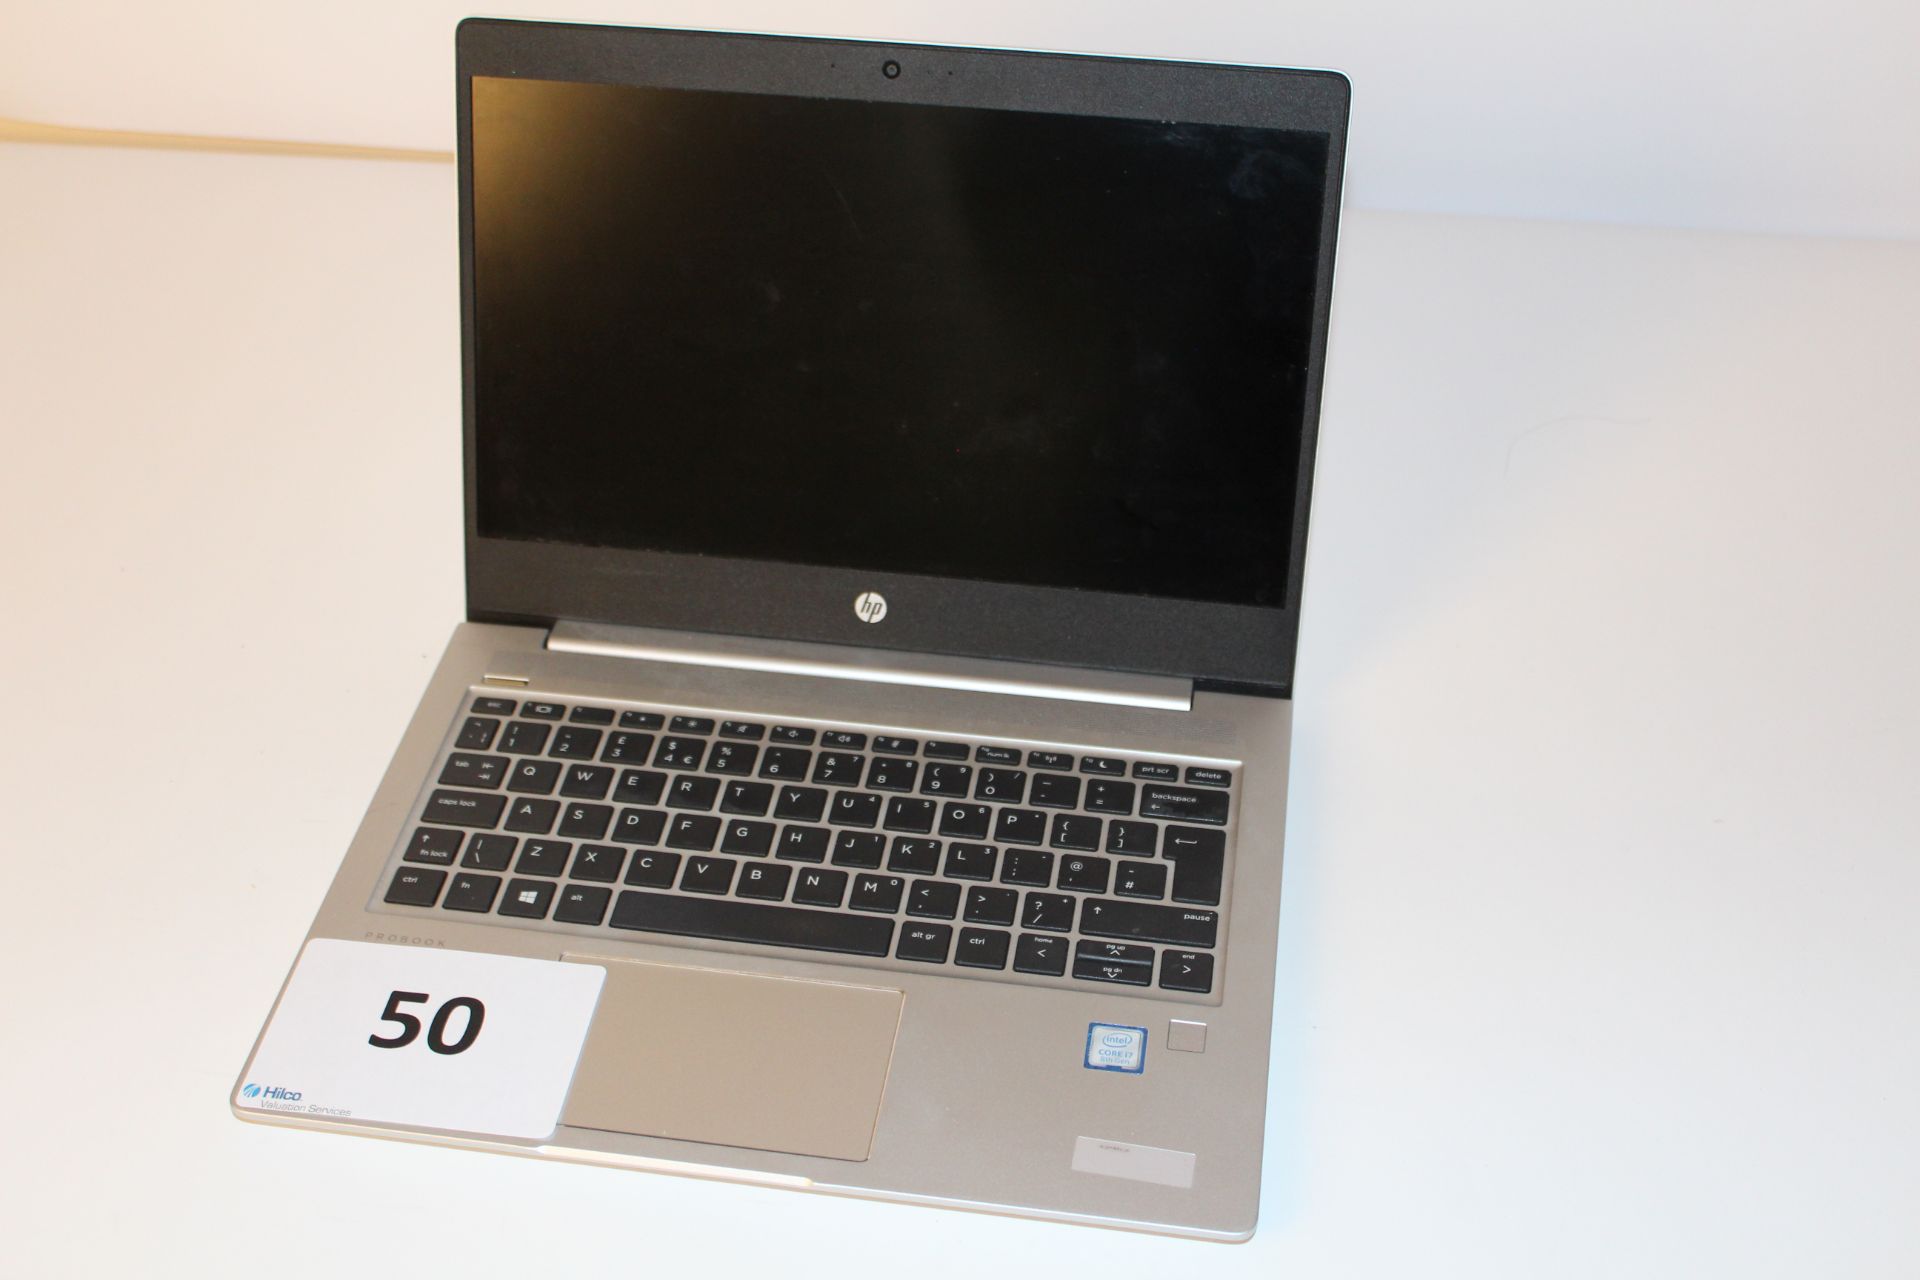 HP ProBook 430 G6 Core i7 Laptop Computer, S/N 5CD117QXK. No charger